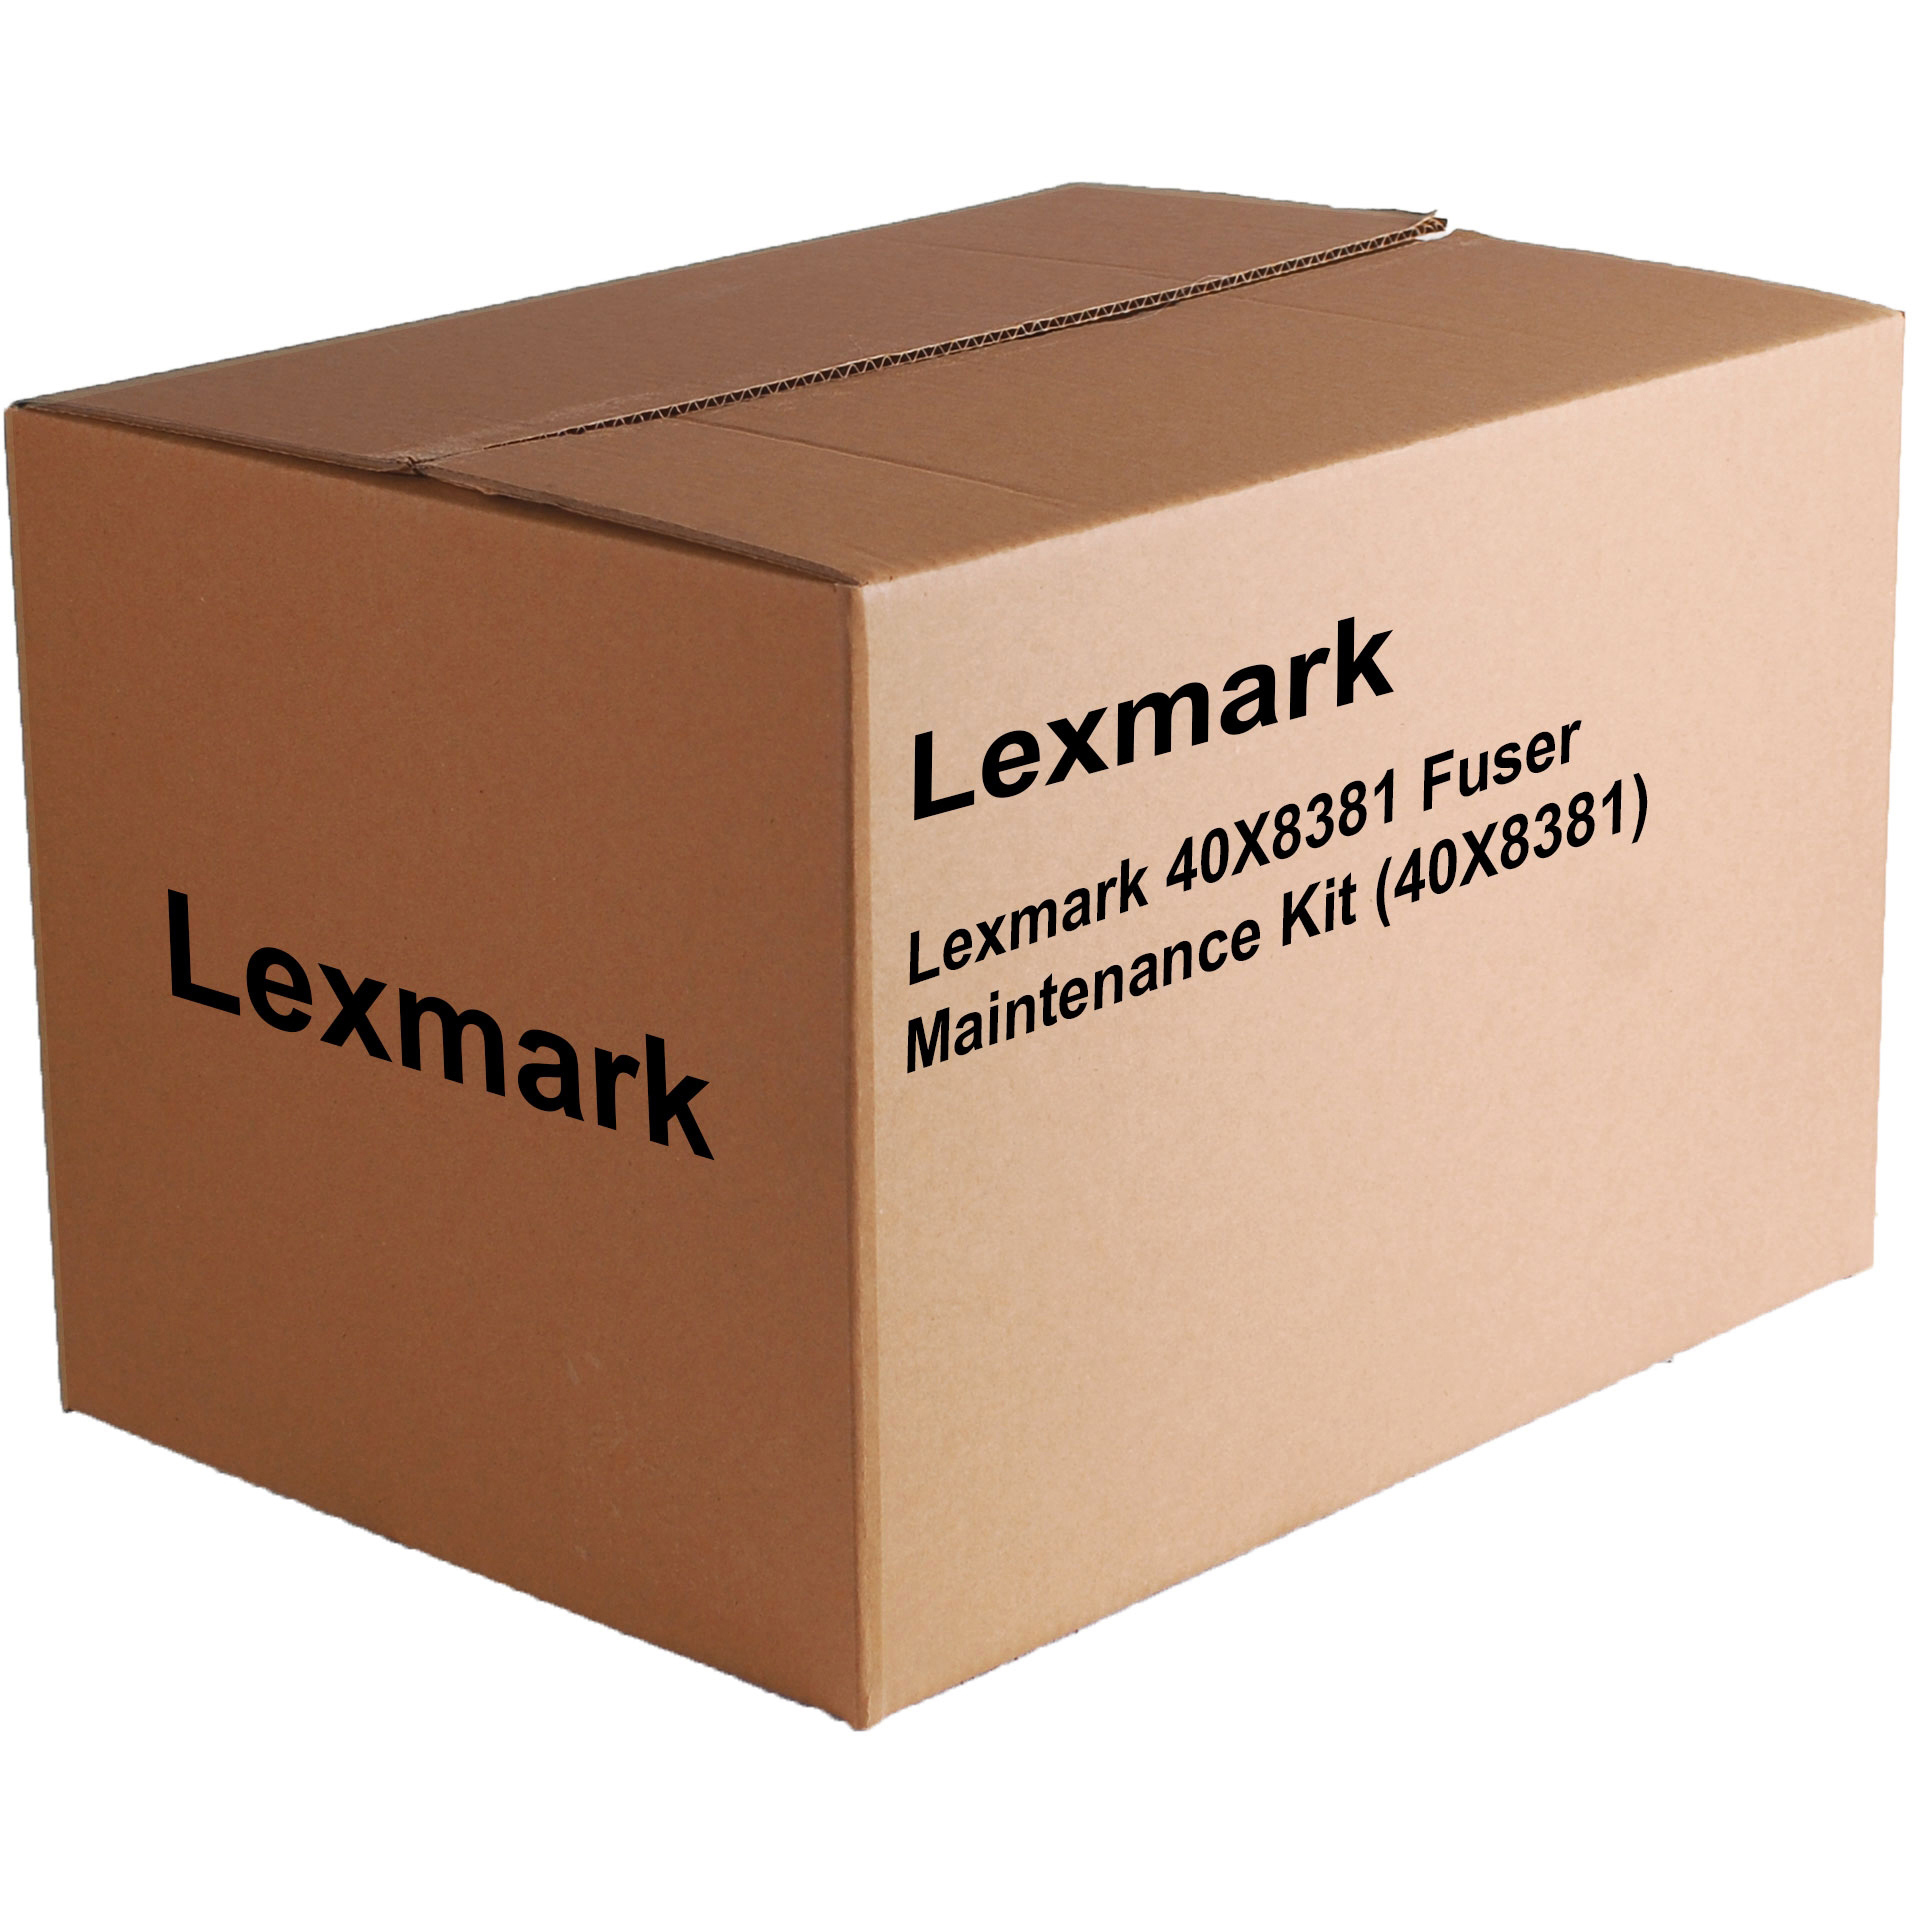 Original Lexmark 40X8381 Fuser Maintenance Kit (40X8381)